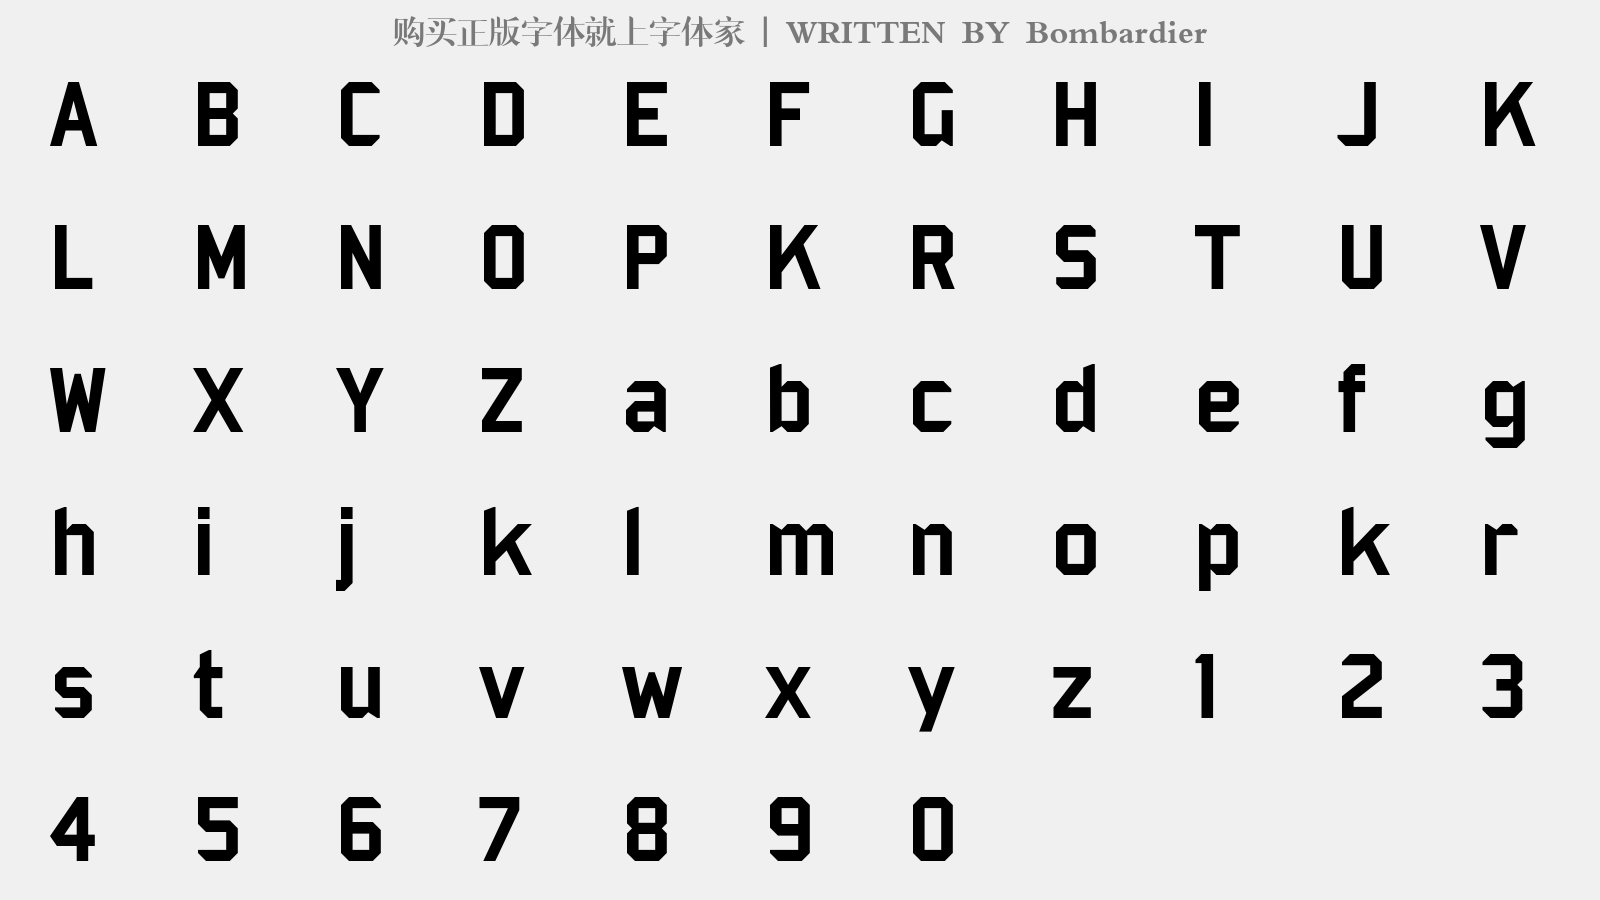 Bombardier - 大写字母/小写字母/数字